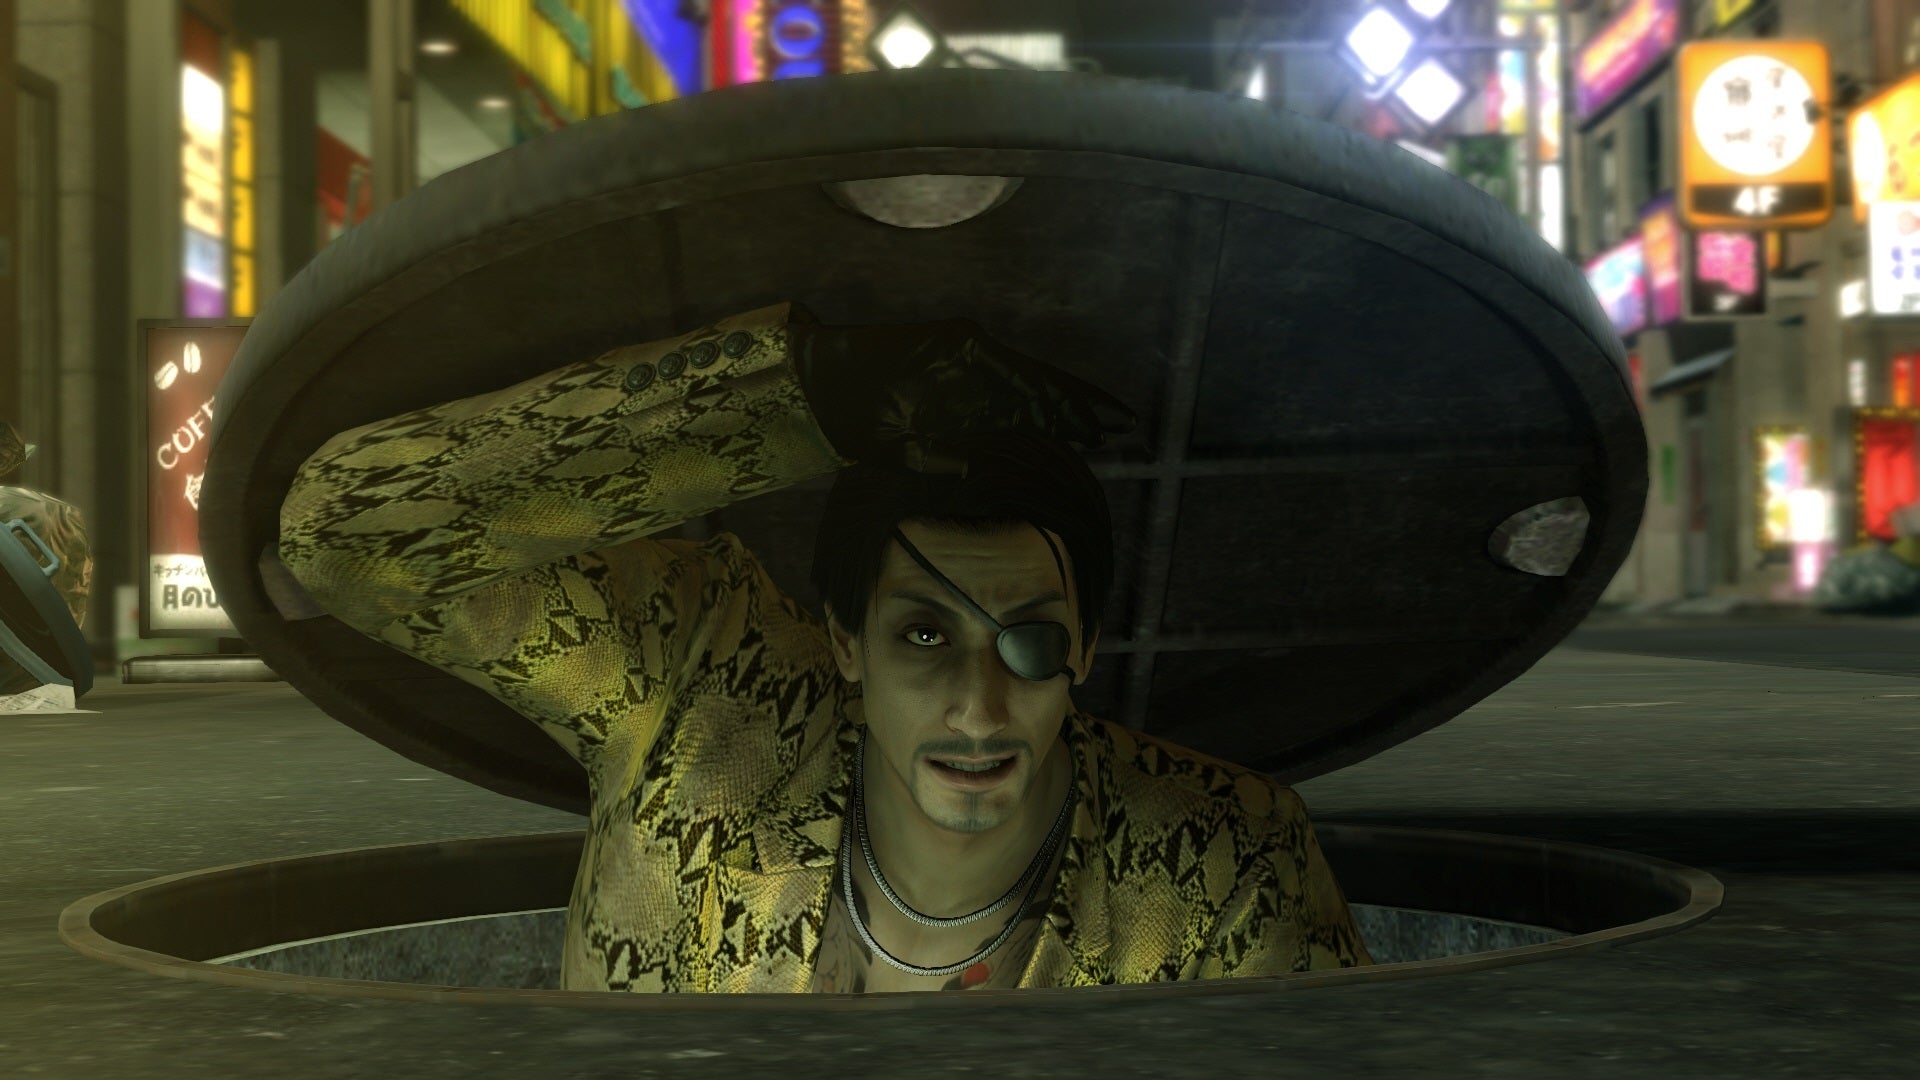 Screenshot from Yakuza Kiwami showing character in a manhole.